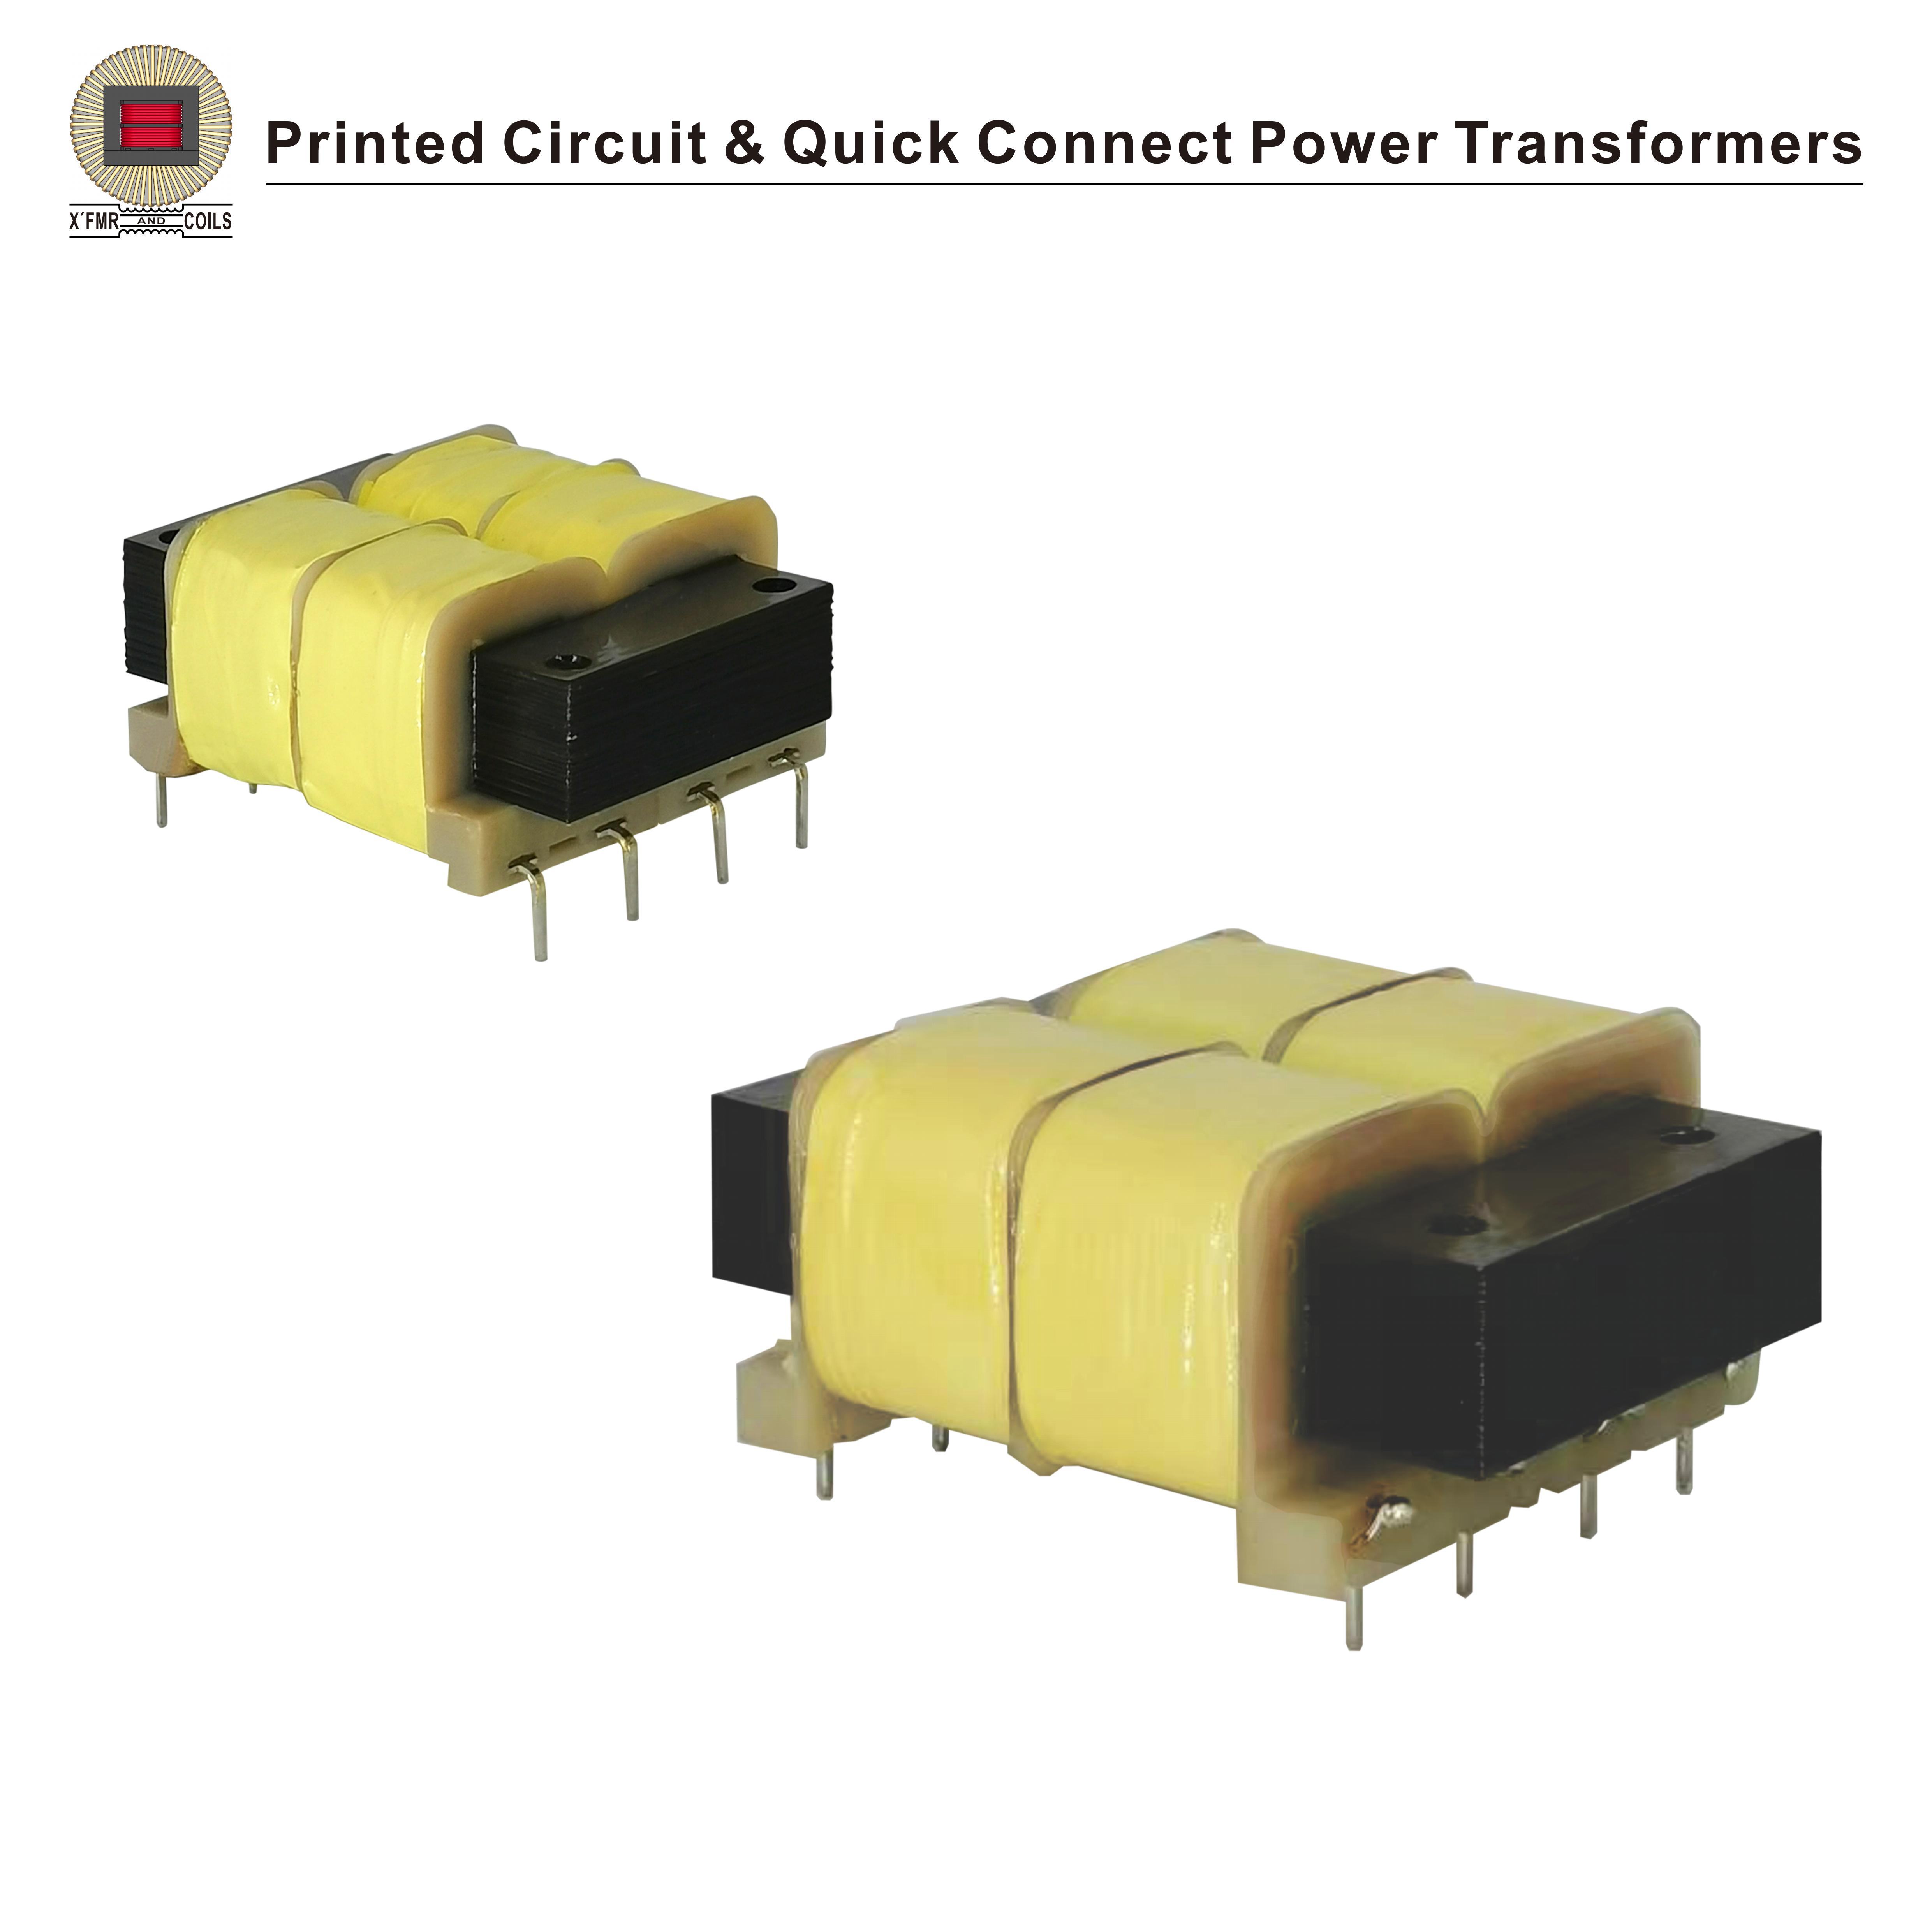 Printed Circuit Power Transformer PCPT-05 Series